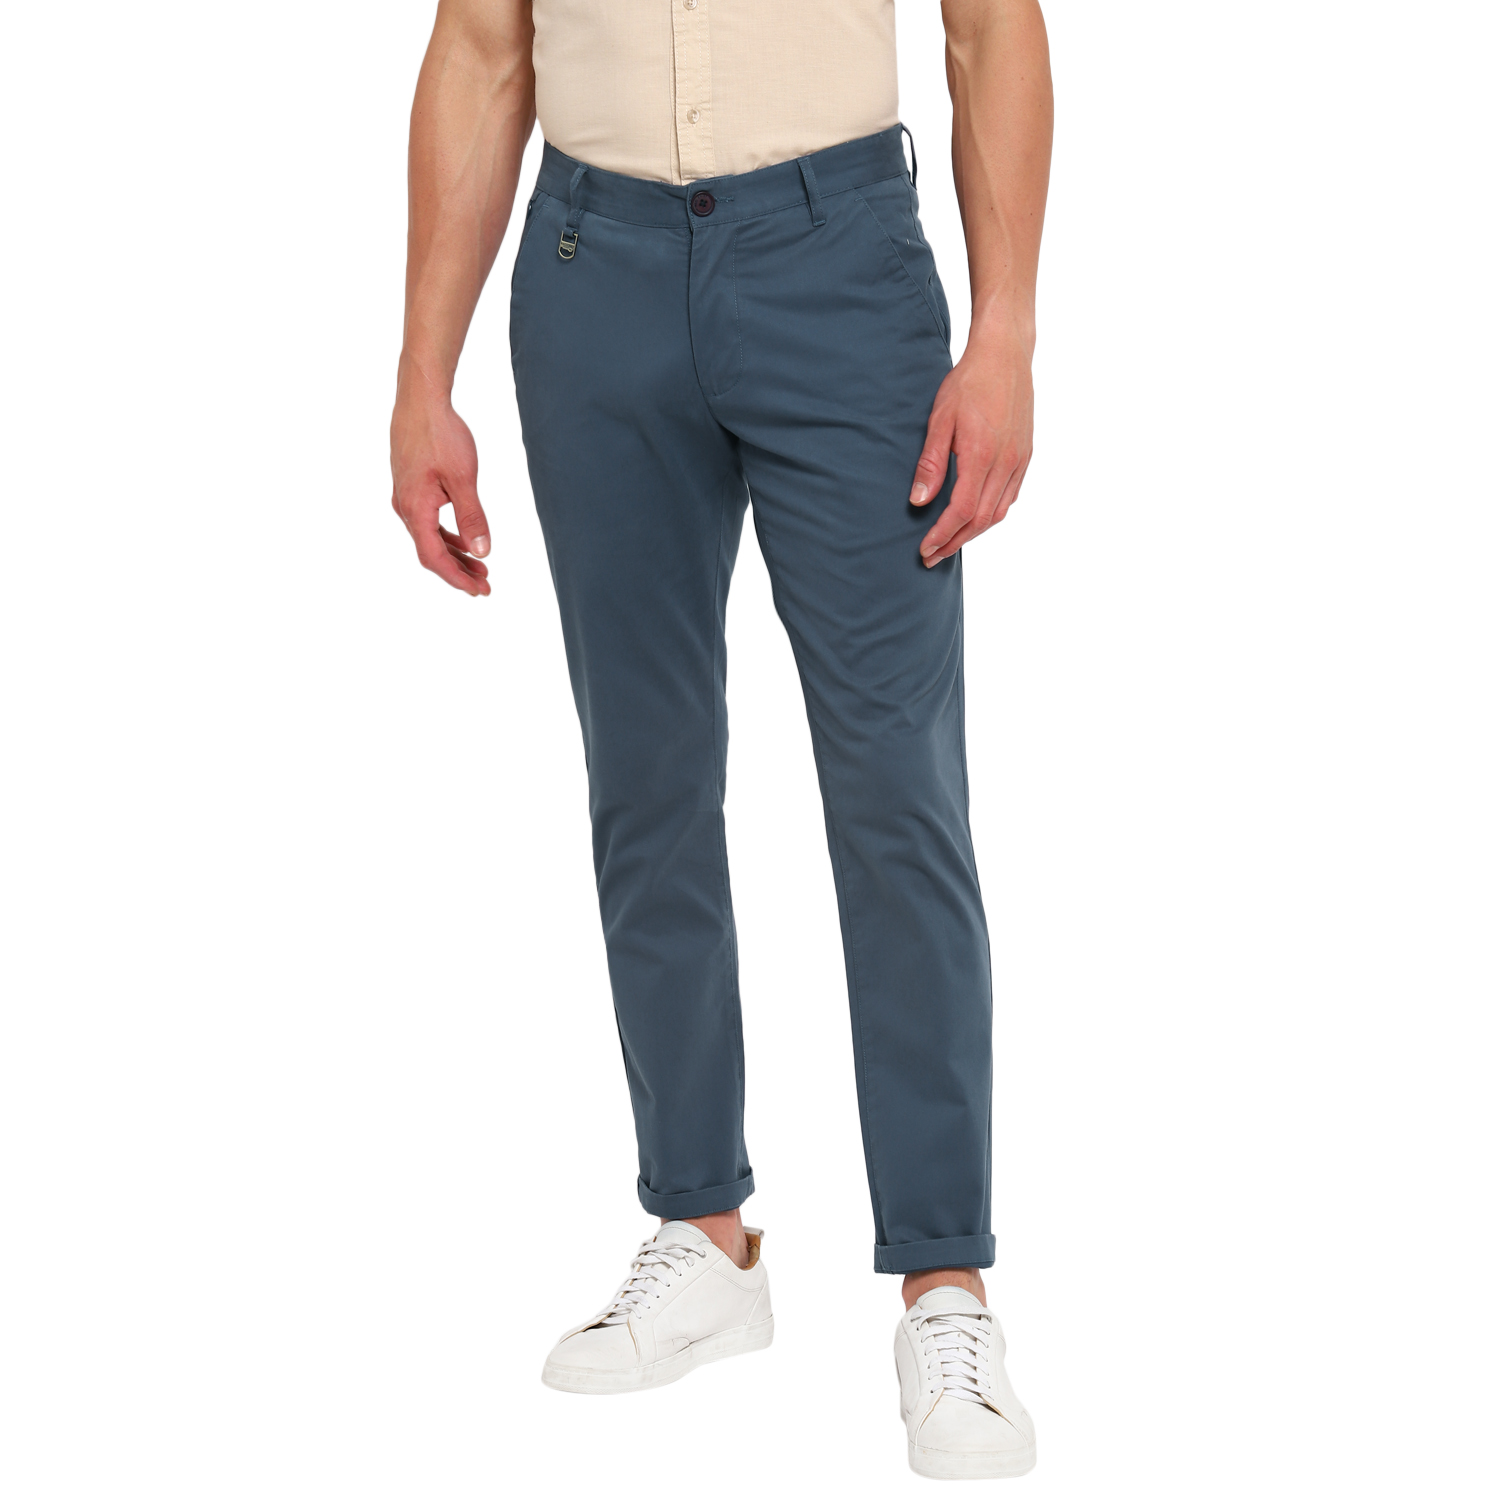 Classic Polo Men's 100% Cotton Moderate Fit Solid Cream Color Trouser